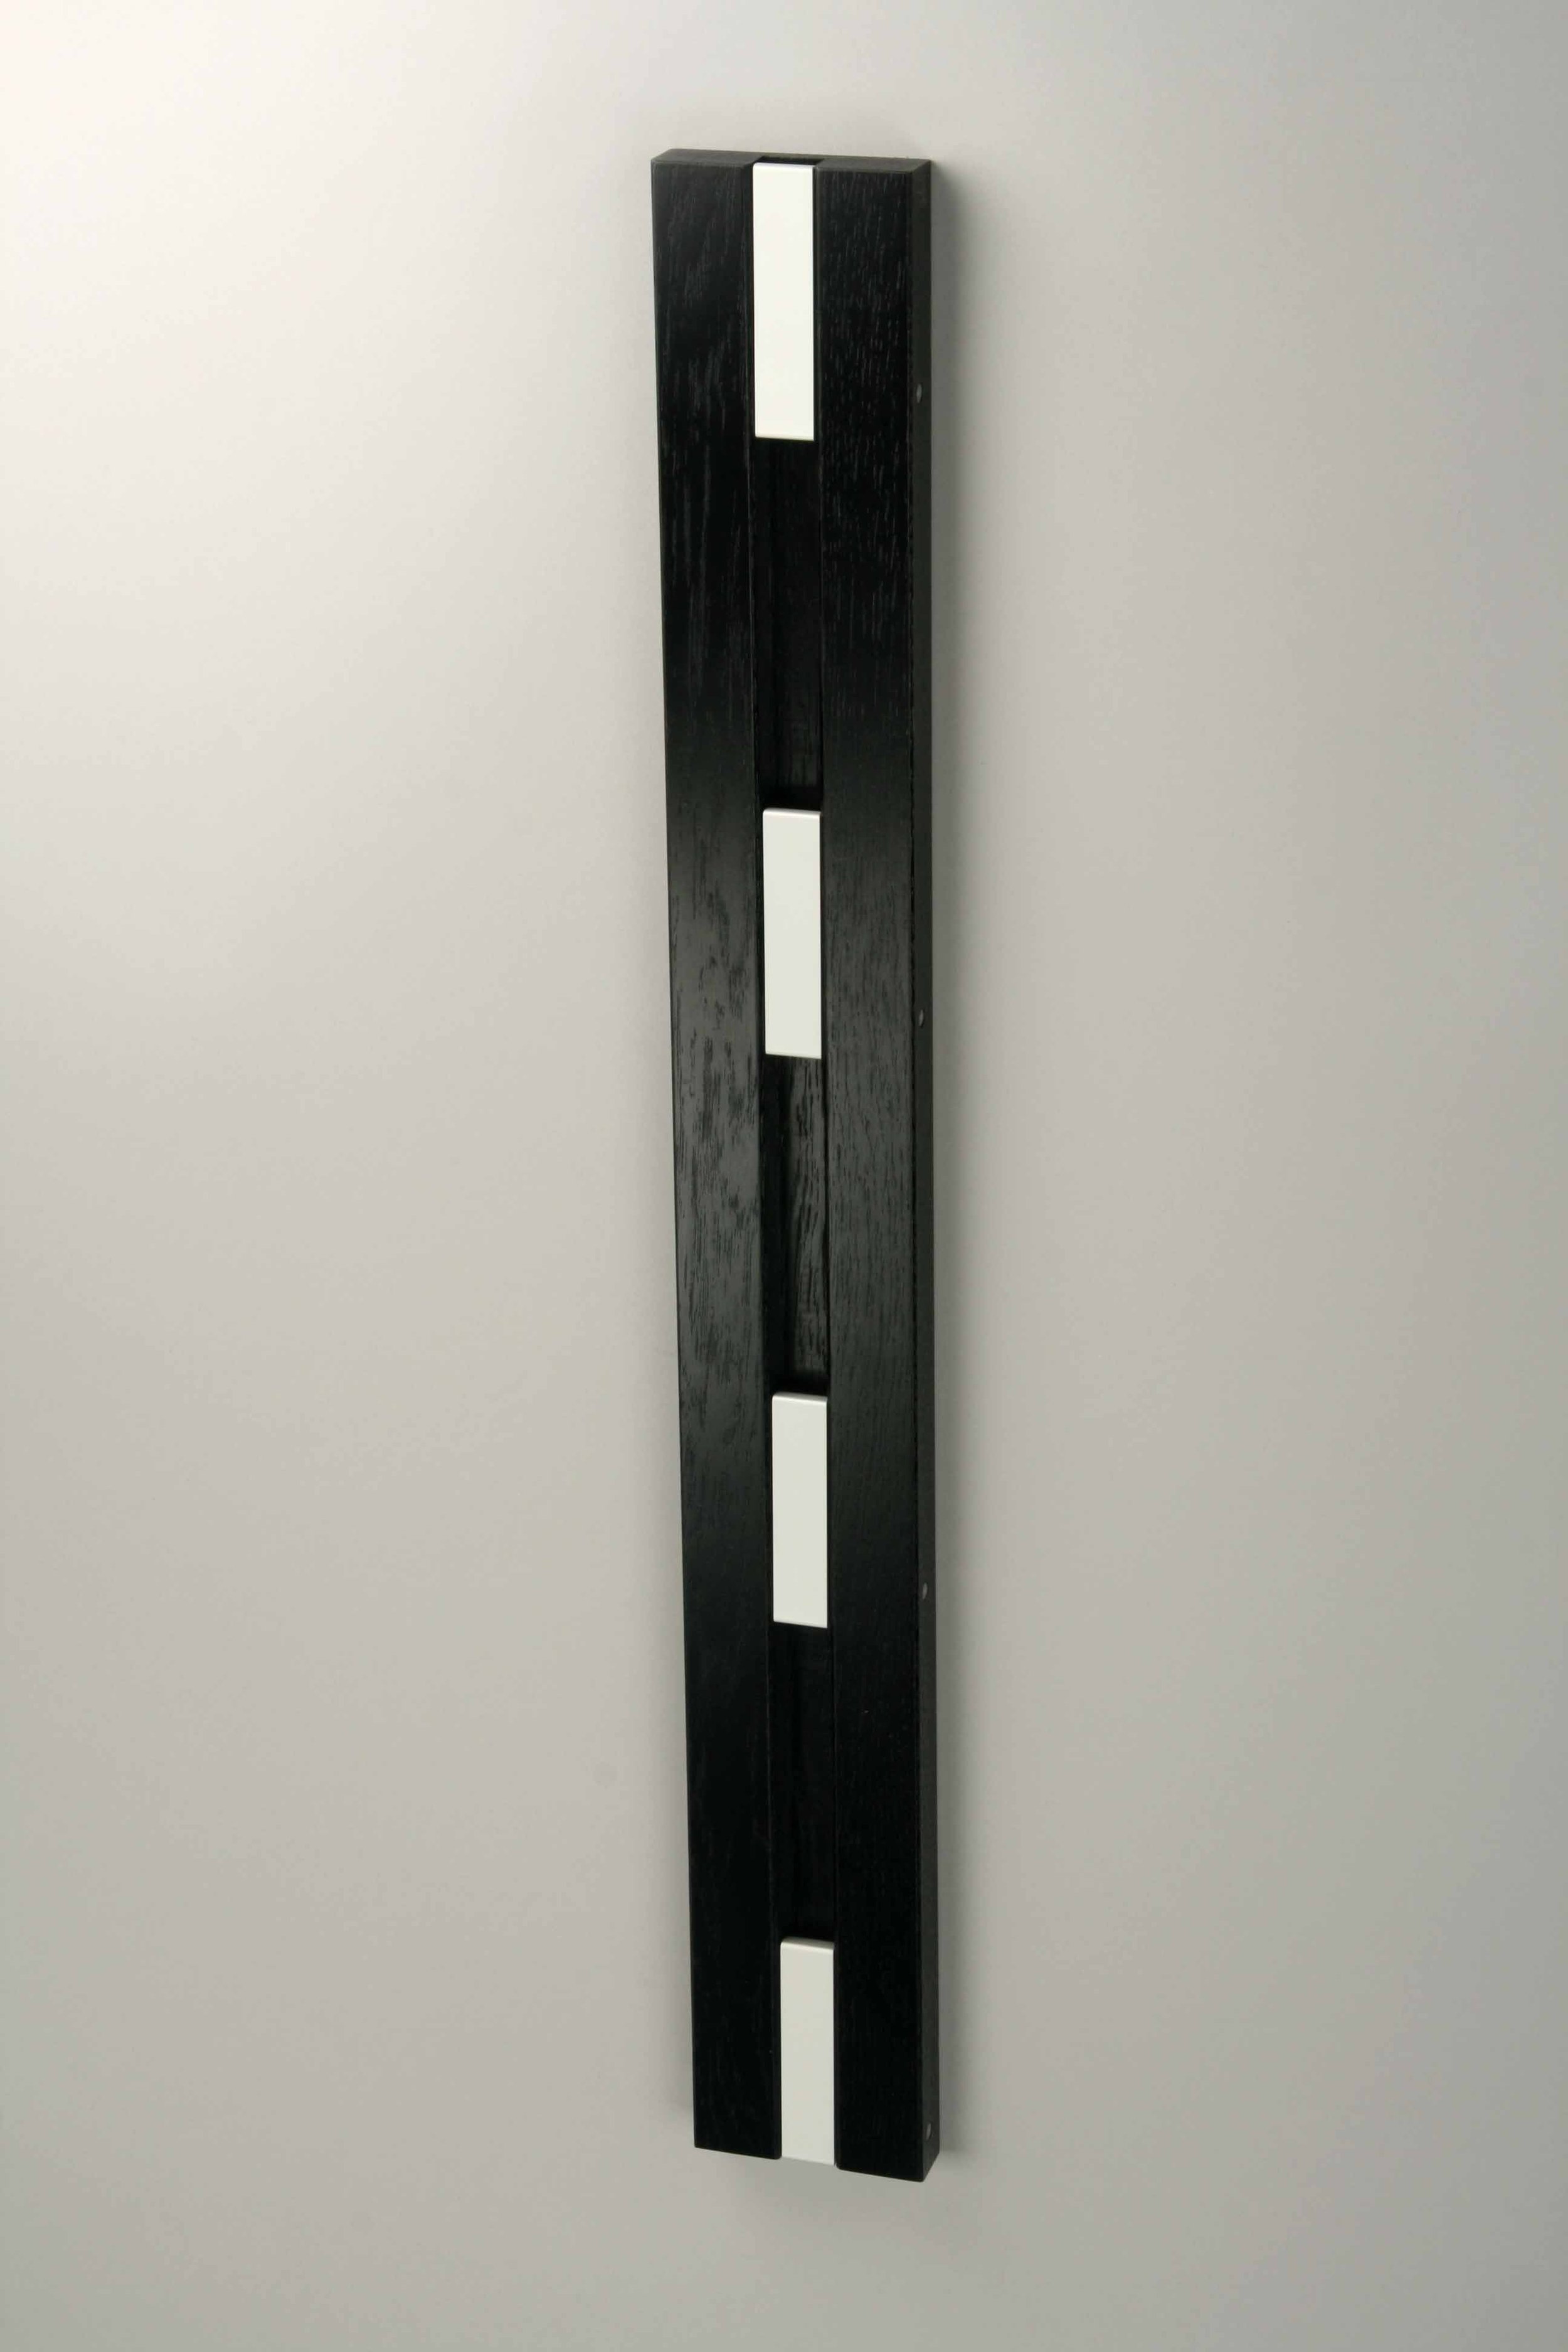 KNAX 4 Porte-sacs Vertikal Chêne (teinté noir) crochets gris